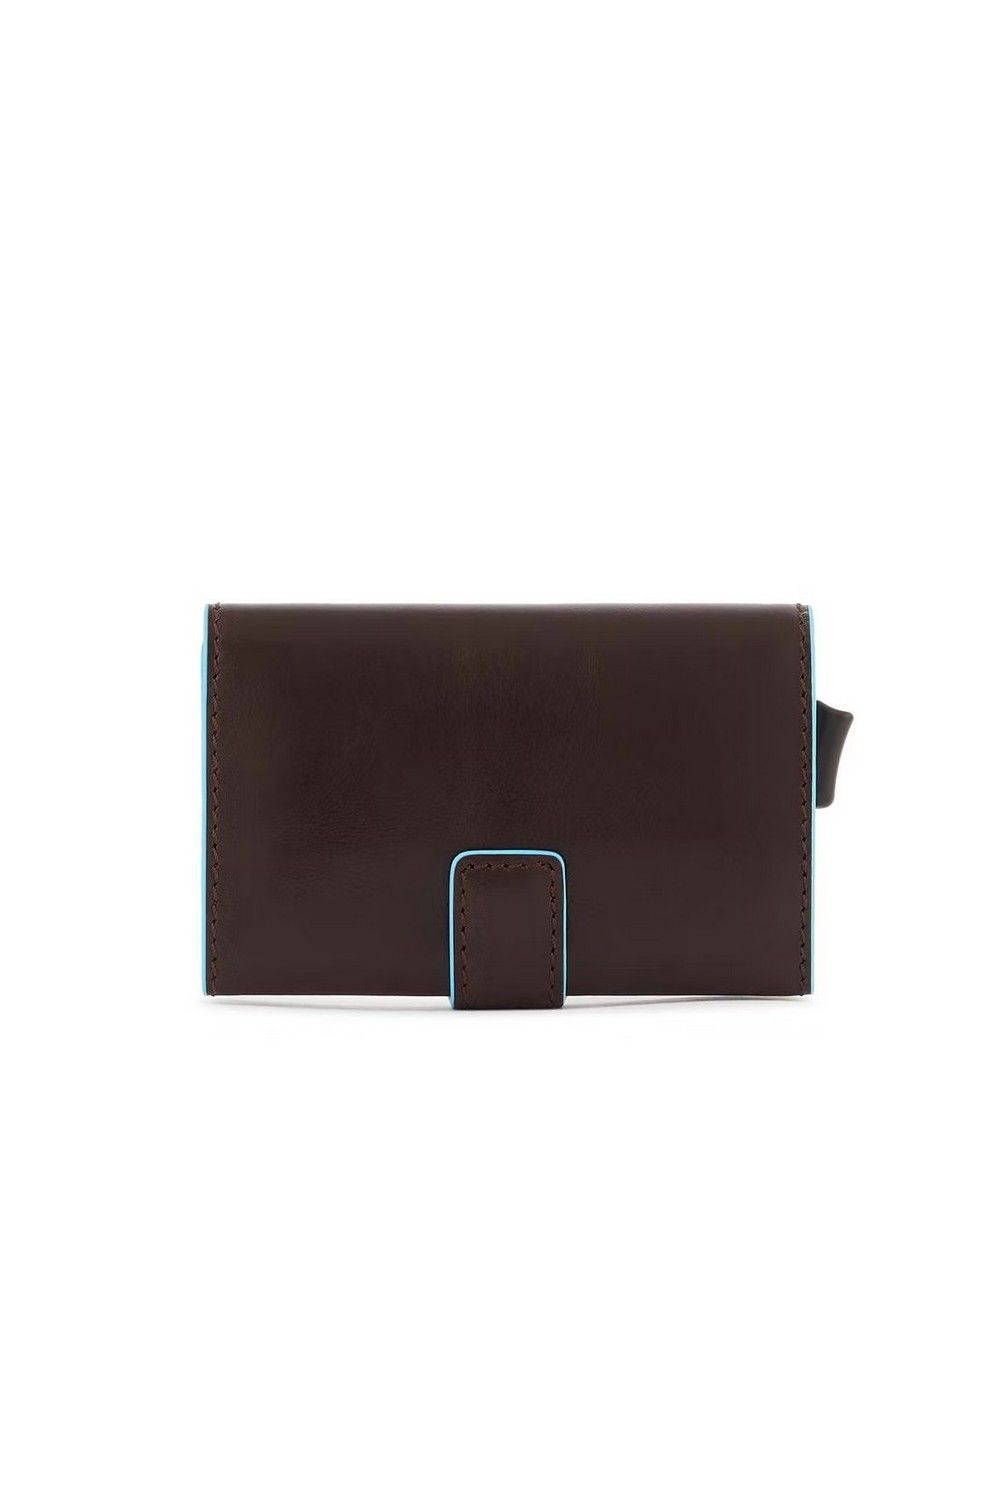 Piquadro Blue Square credit card case 2